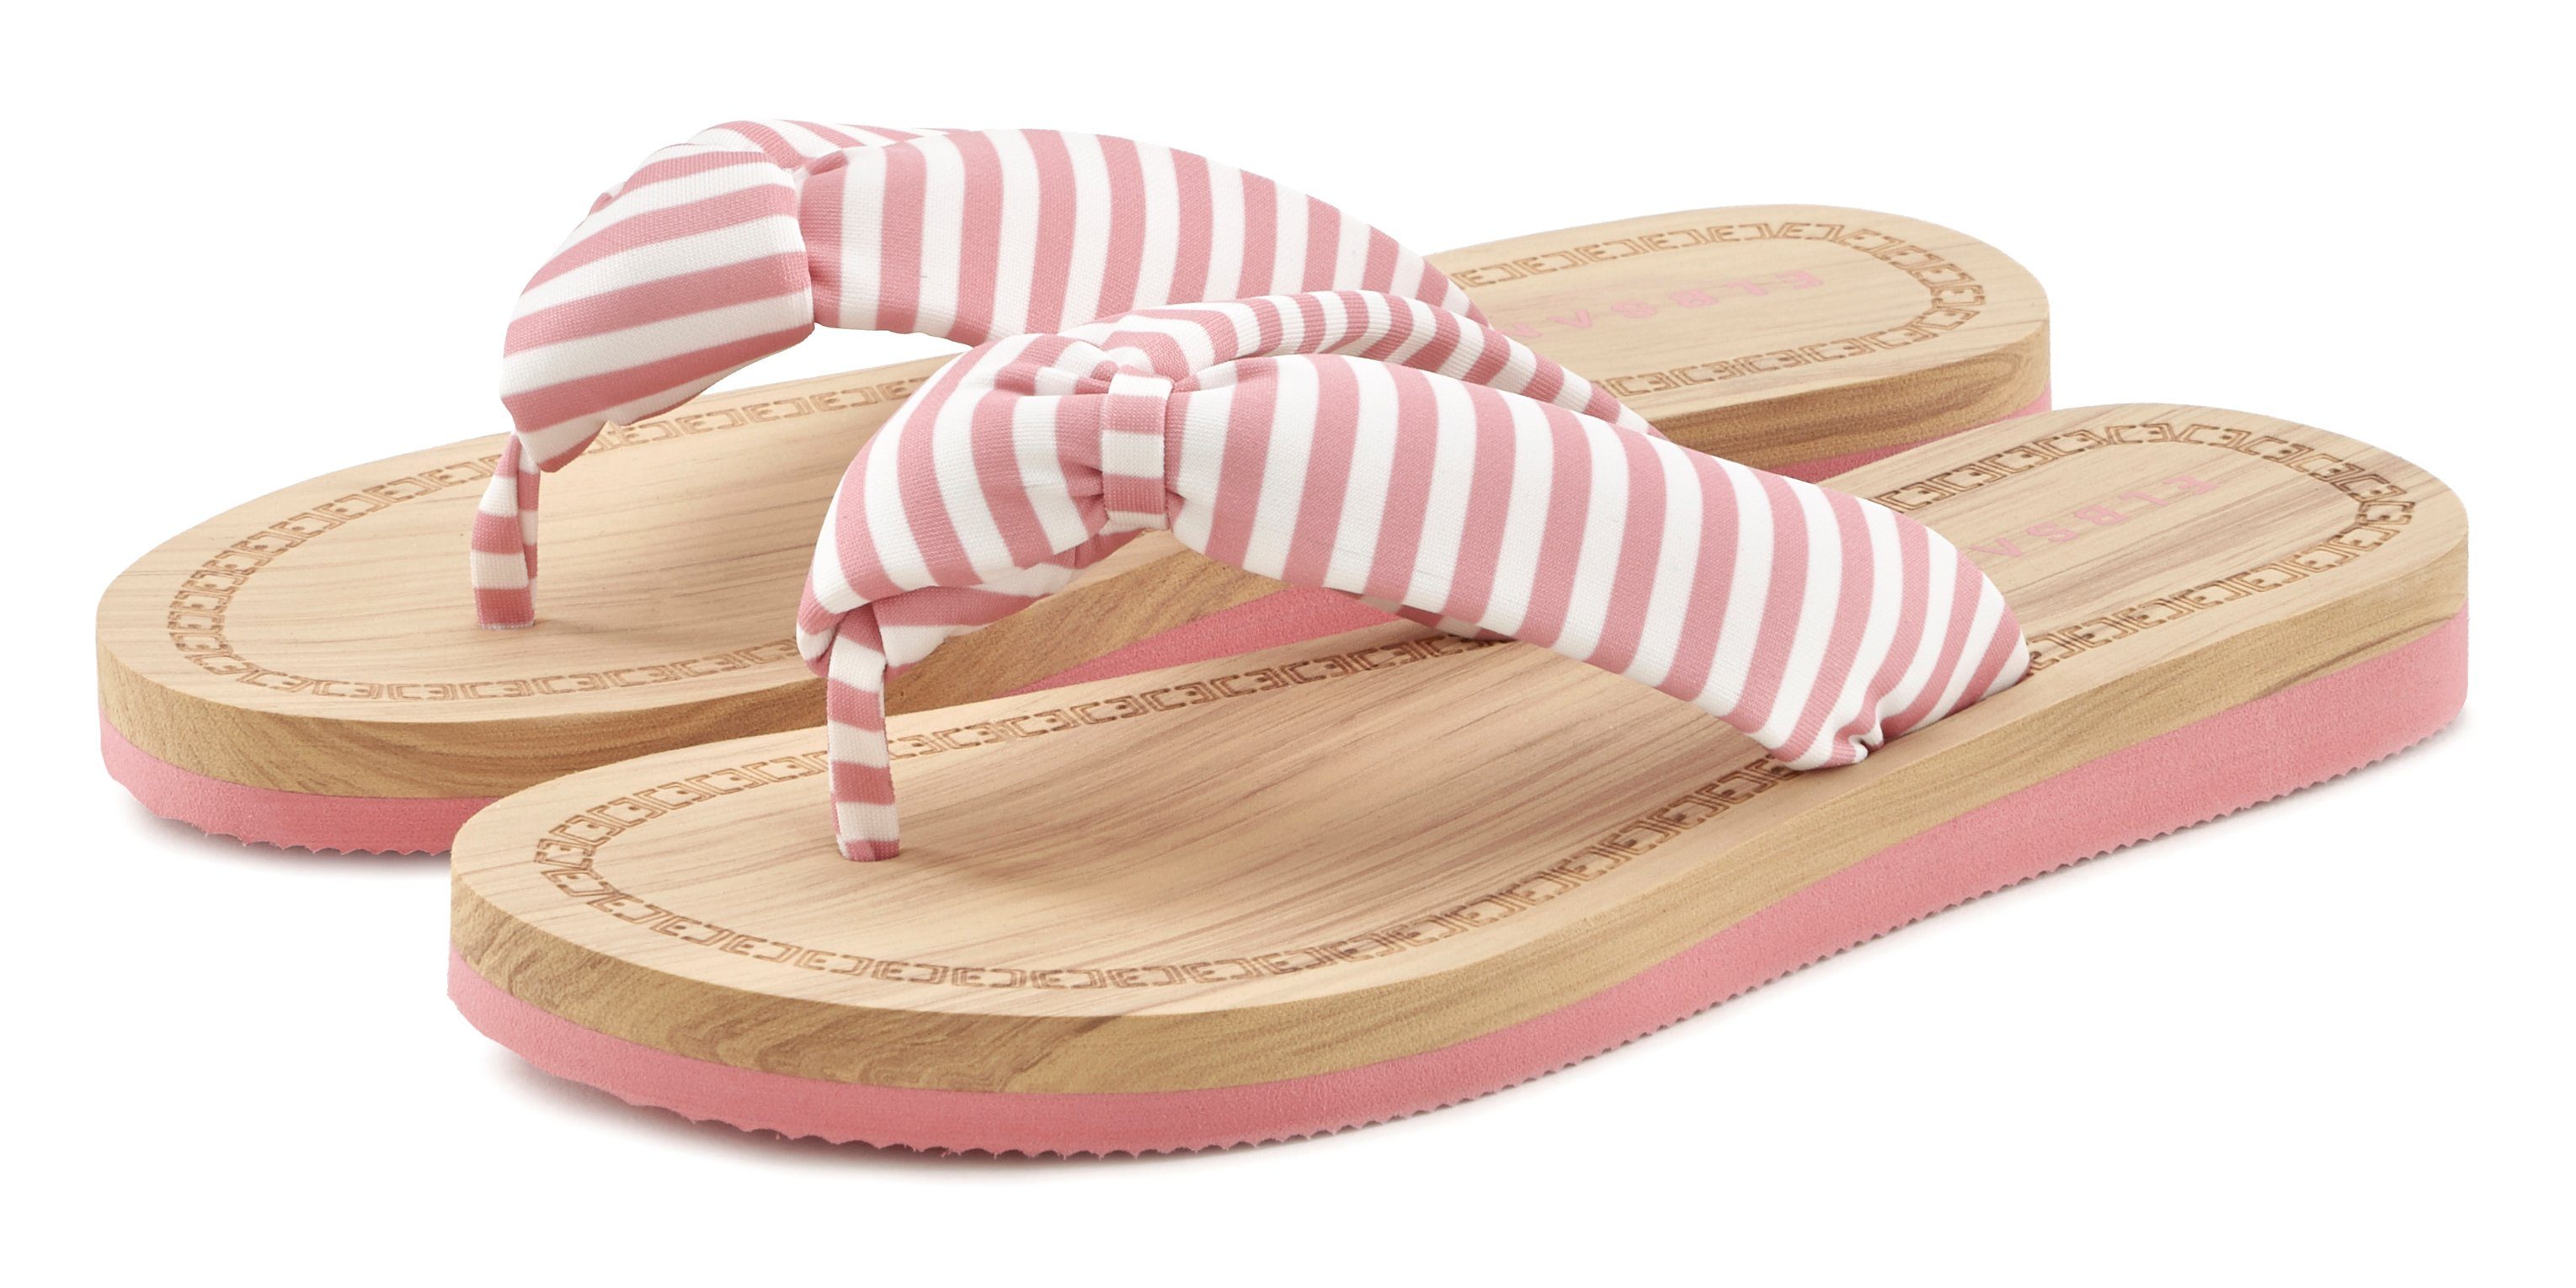 Badeschuh Sandale, Badezehentrenner rosa-gestreift VEGAN Elbsand Pantolette, ultraleicht